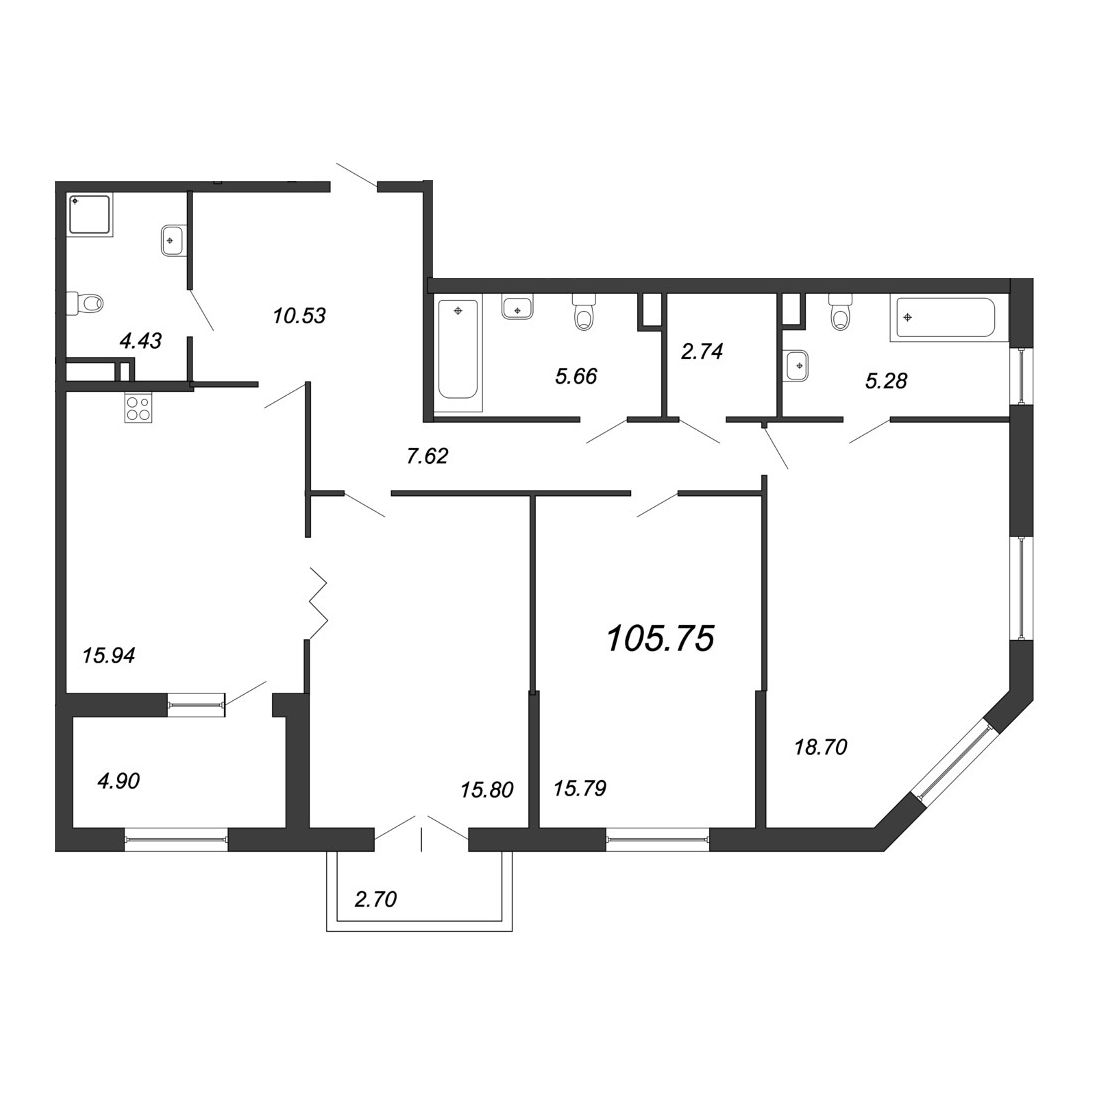 3-комнатная квартира, 107.2 м² в ЖК "Петровская Доминанта" - планировка, фото №1